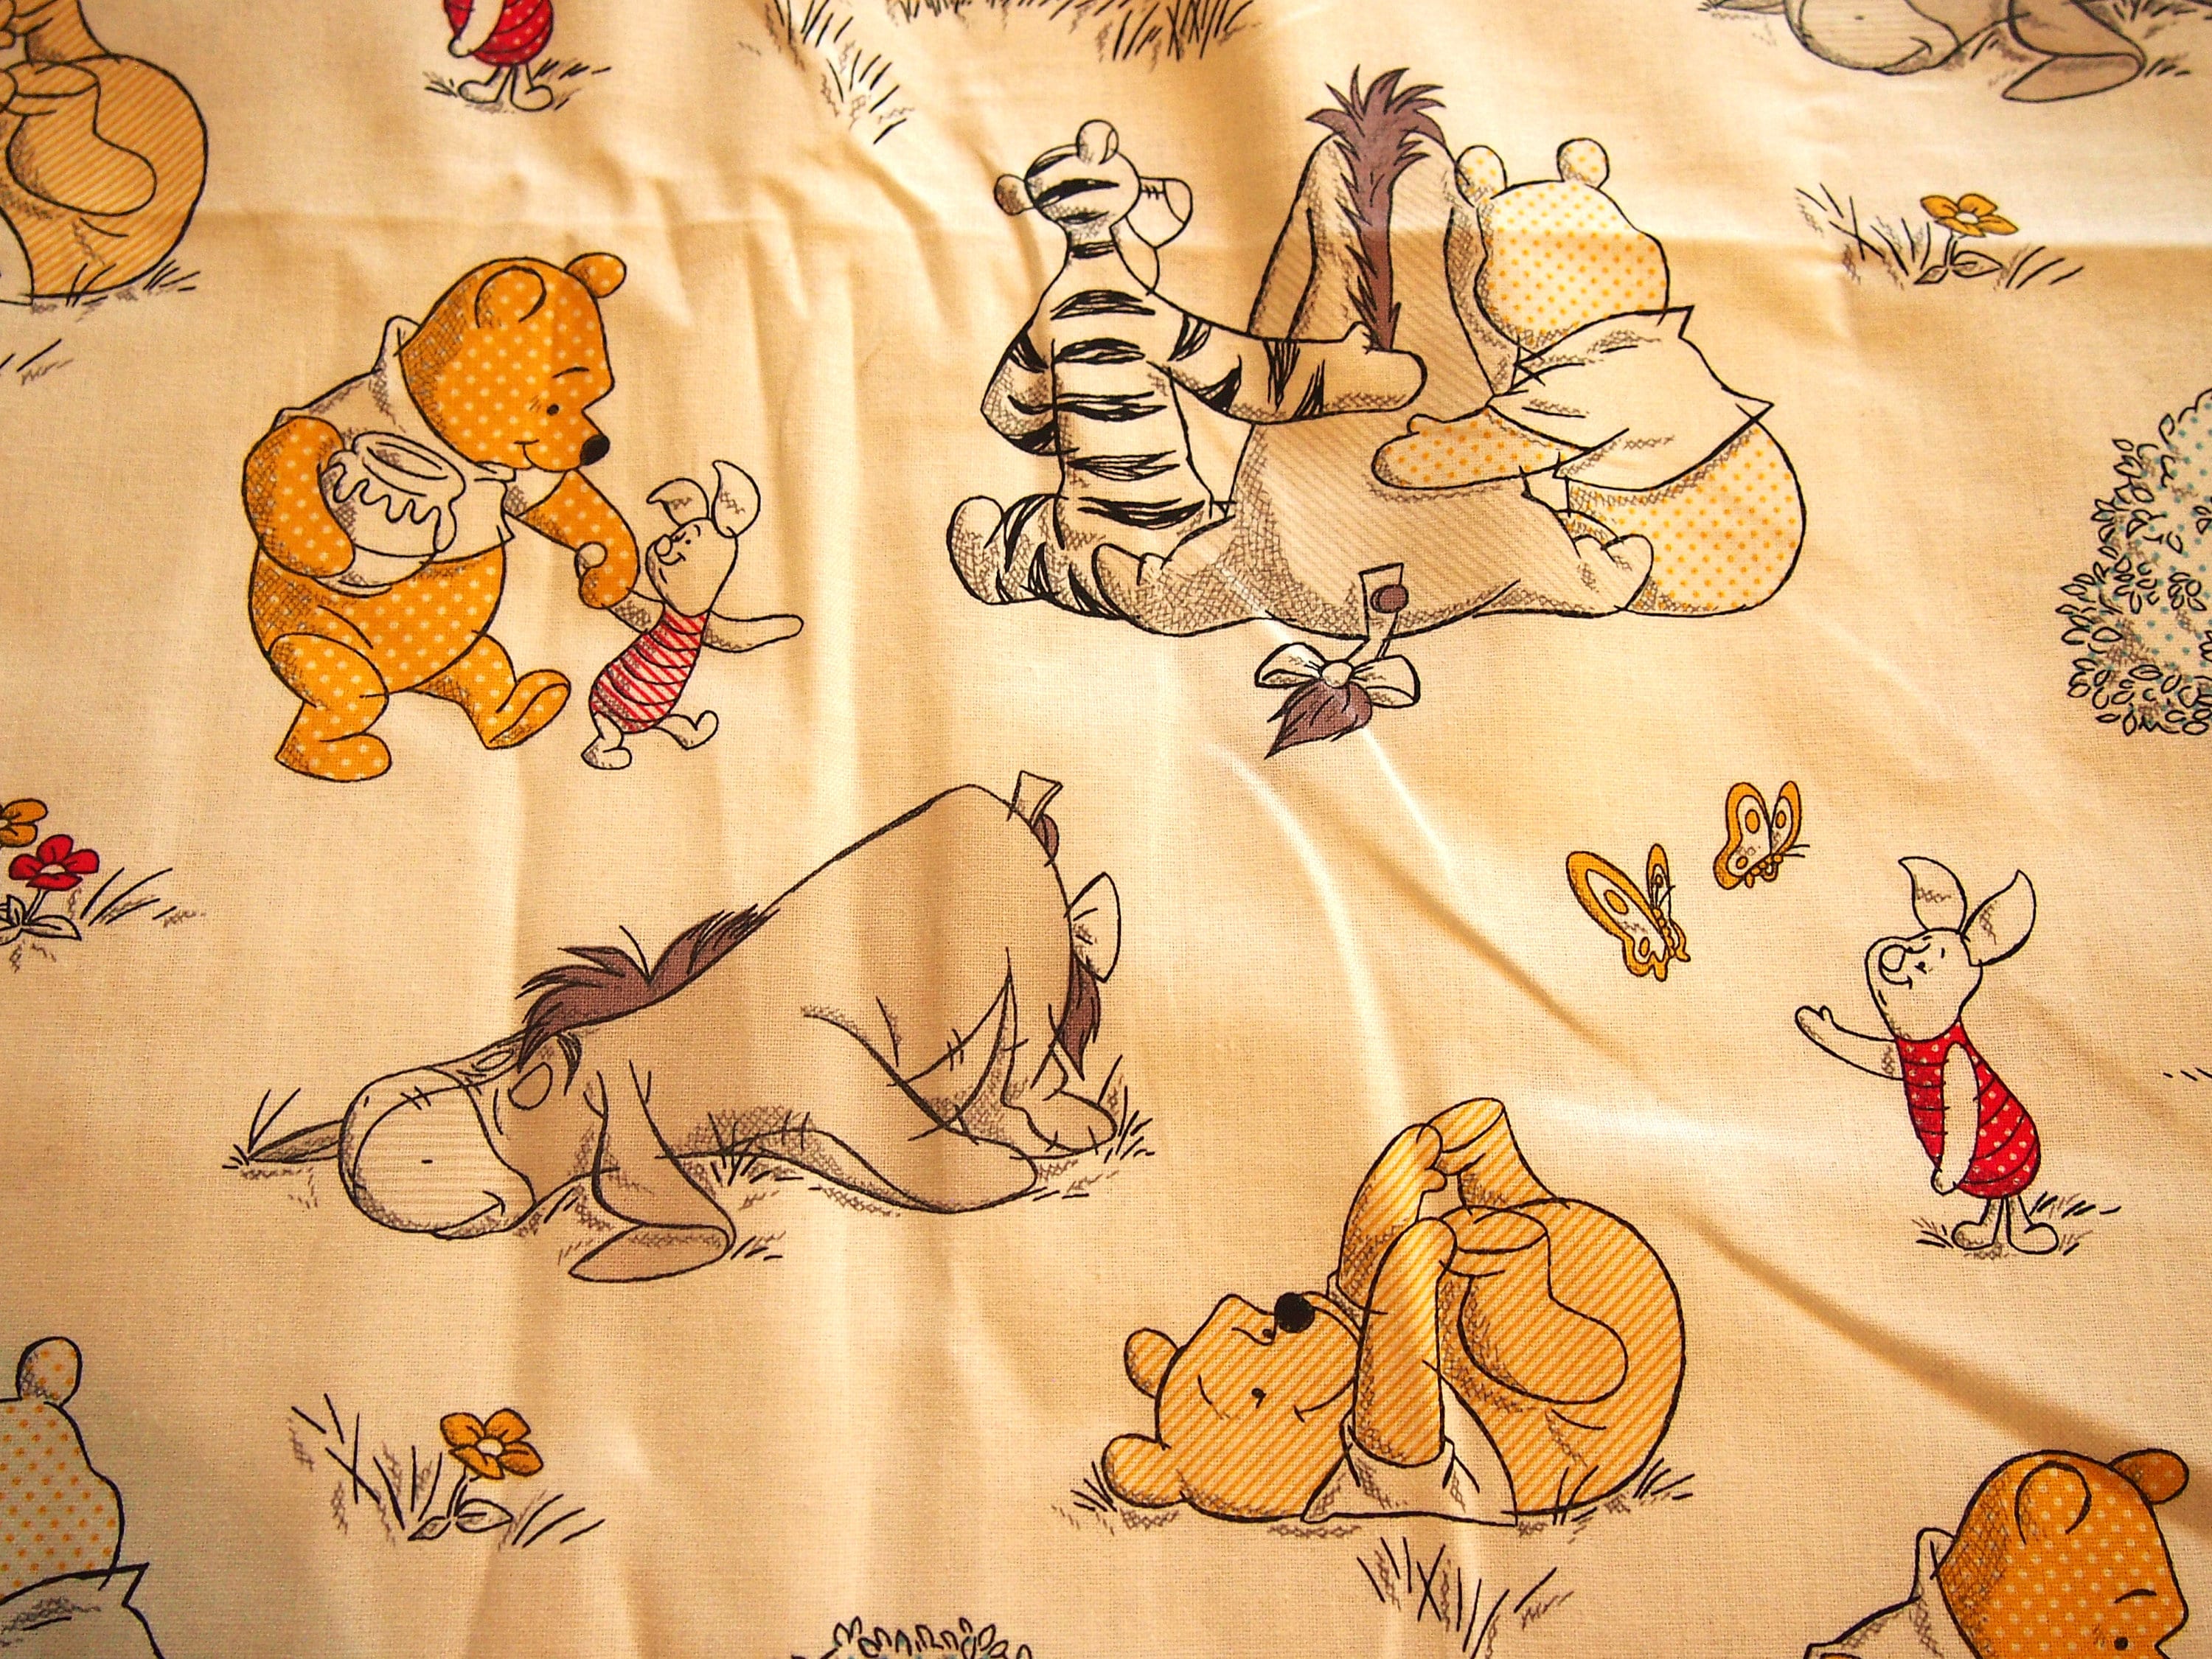 Winnie the Pooh Fabric Anime Cartoon Cotton Fabric by the Half Yard 